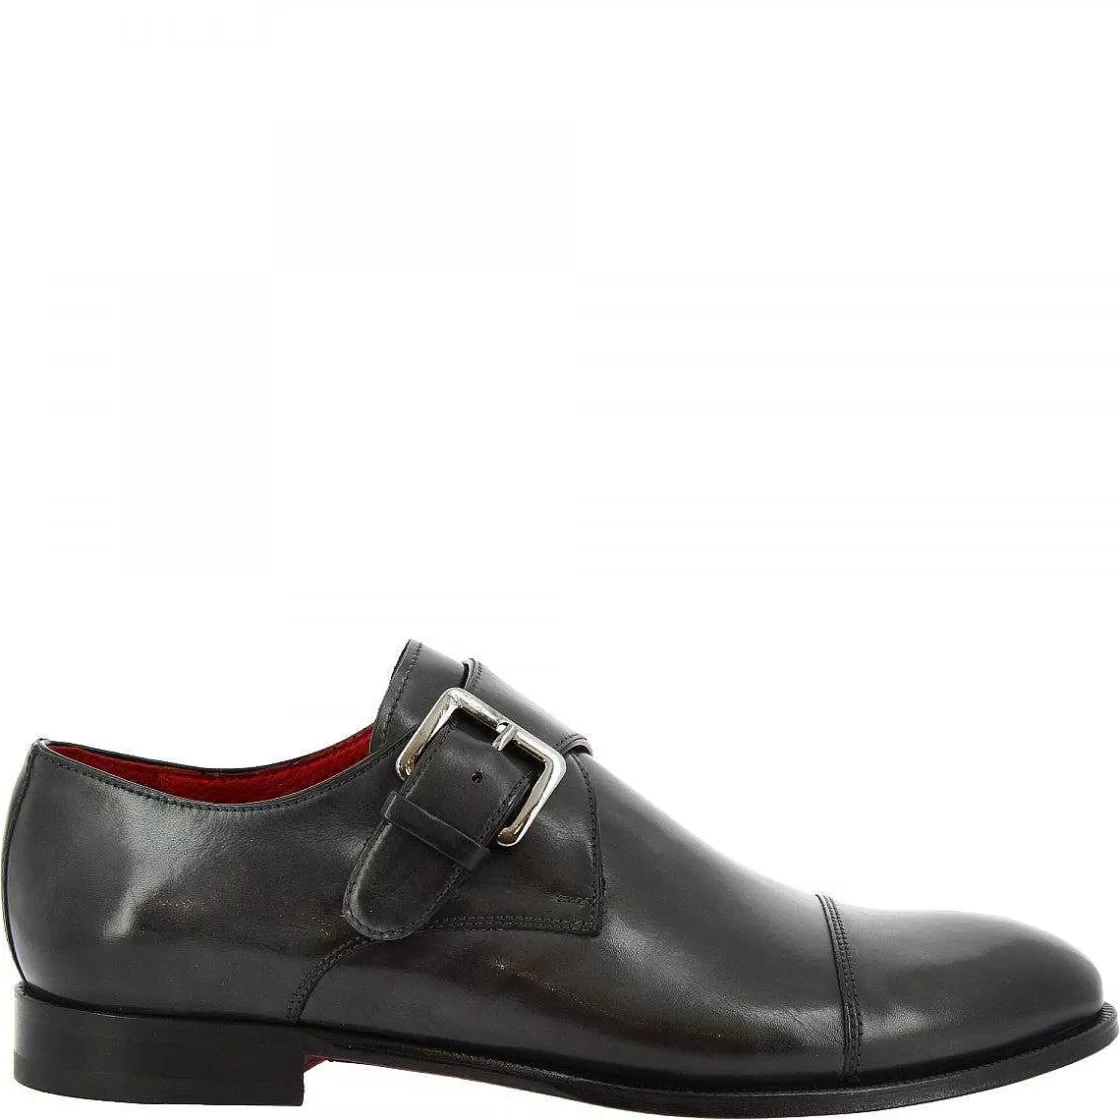 Leonardo Men'S Handmade Elegant Shoes With Buckle In Gray Delave Calf Leather New